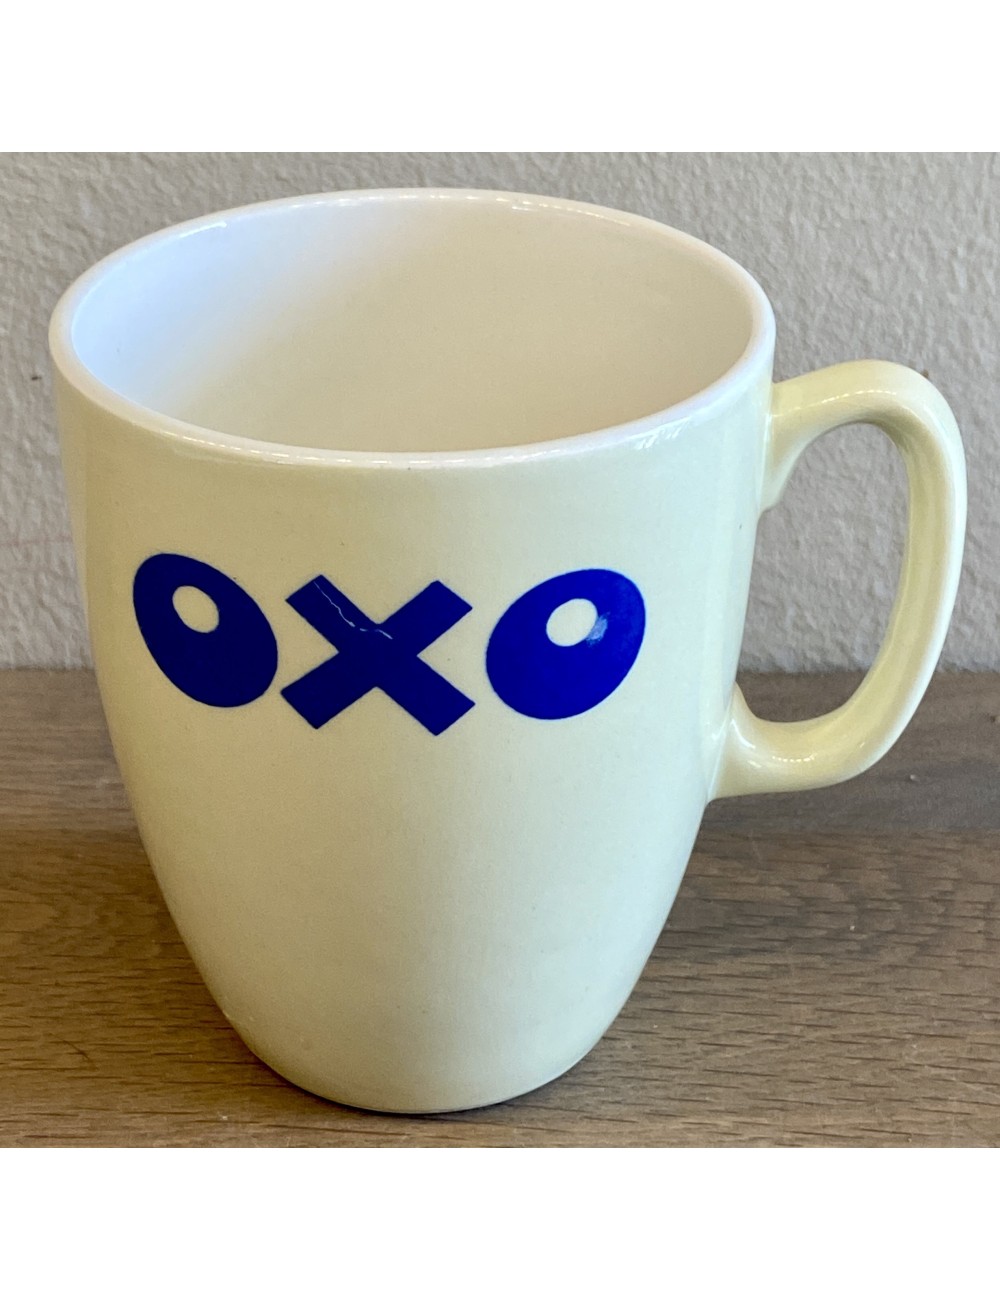 Mok / Beker - ongemerkt - pastelgeel met opschrift OXO in blauwe letters